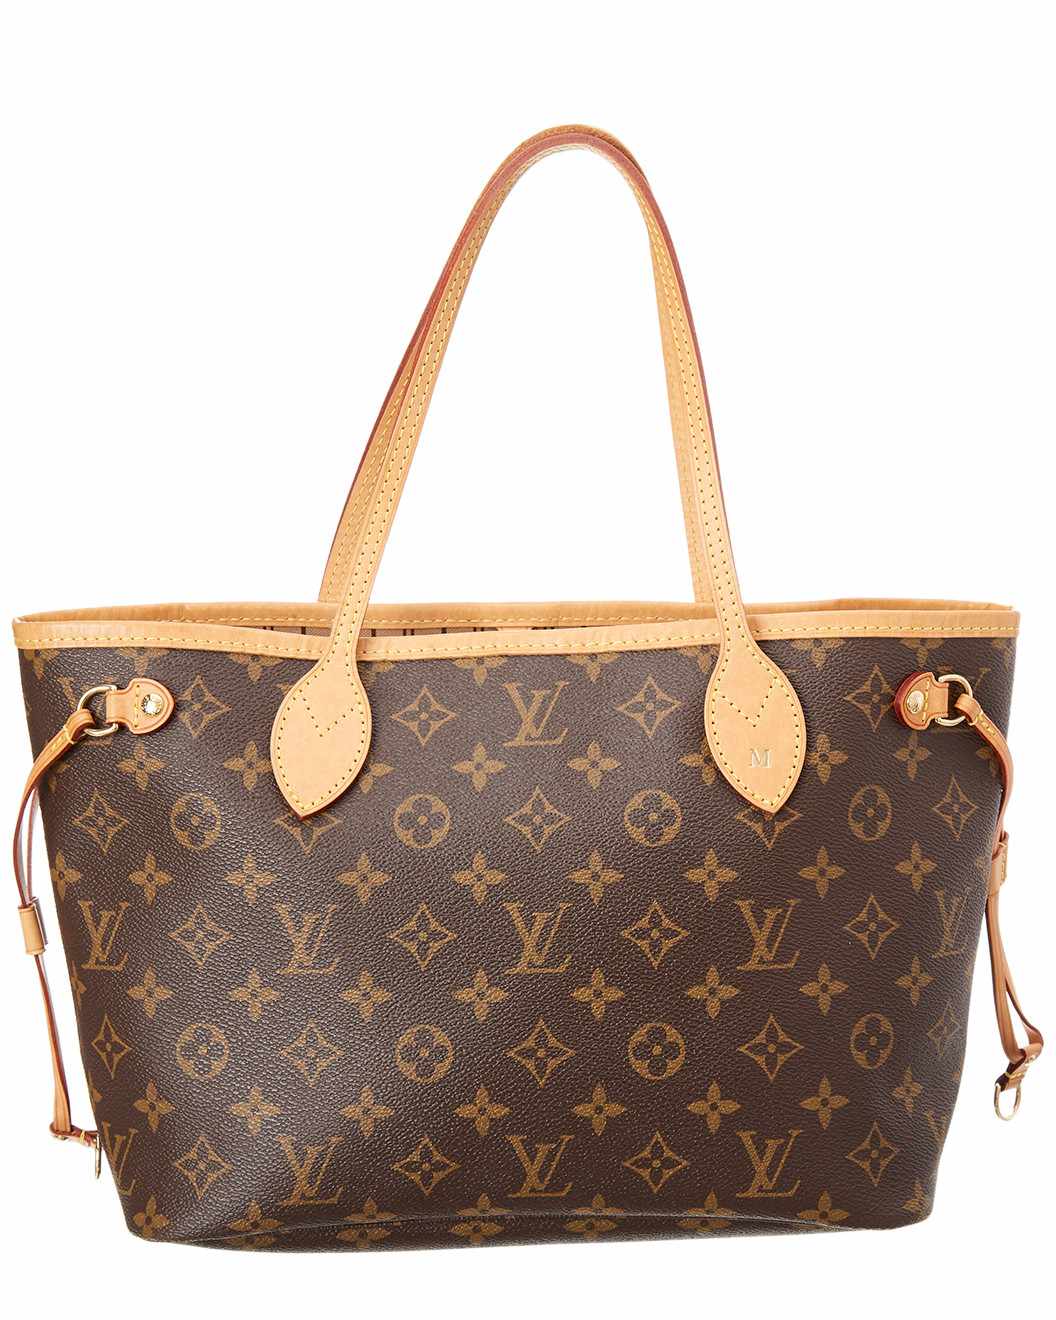 North Dallas resale shop puts Louis Vuitton handbags within reach -  CultureMap Dallas